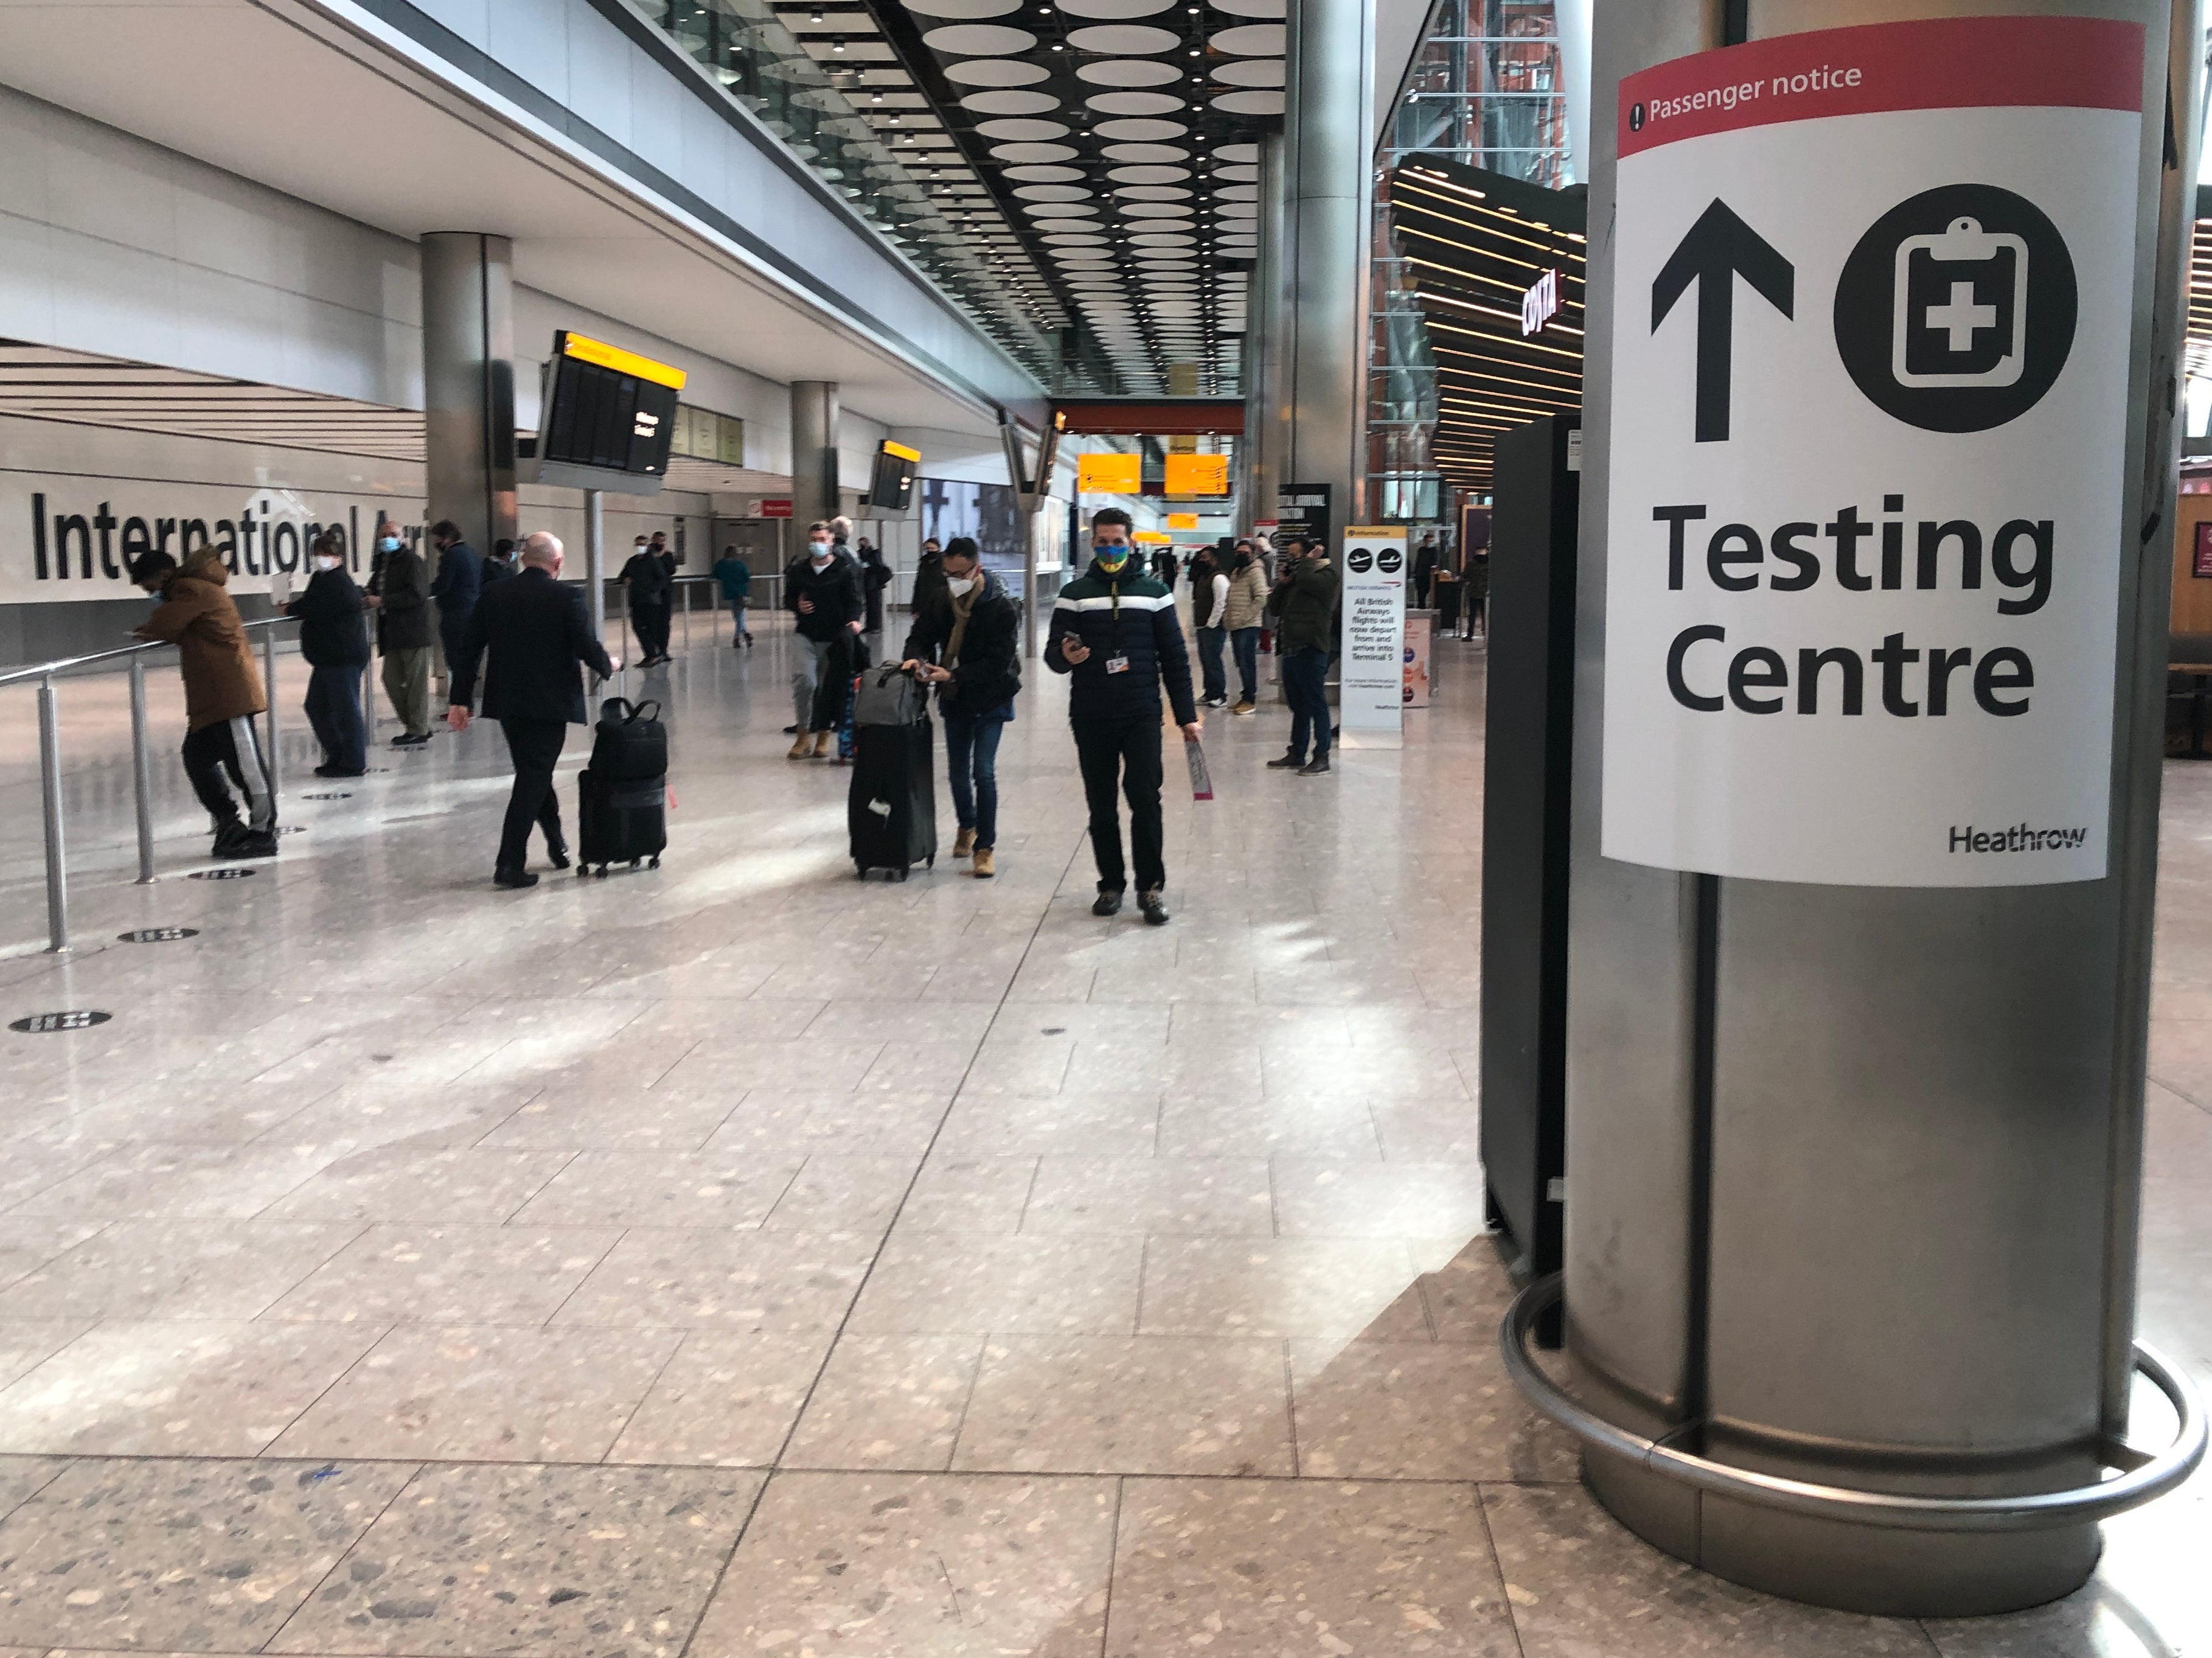 Test case: International Arrivals at Heathrow Terminal 5